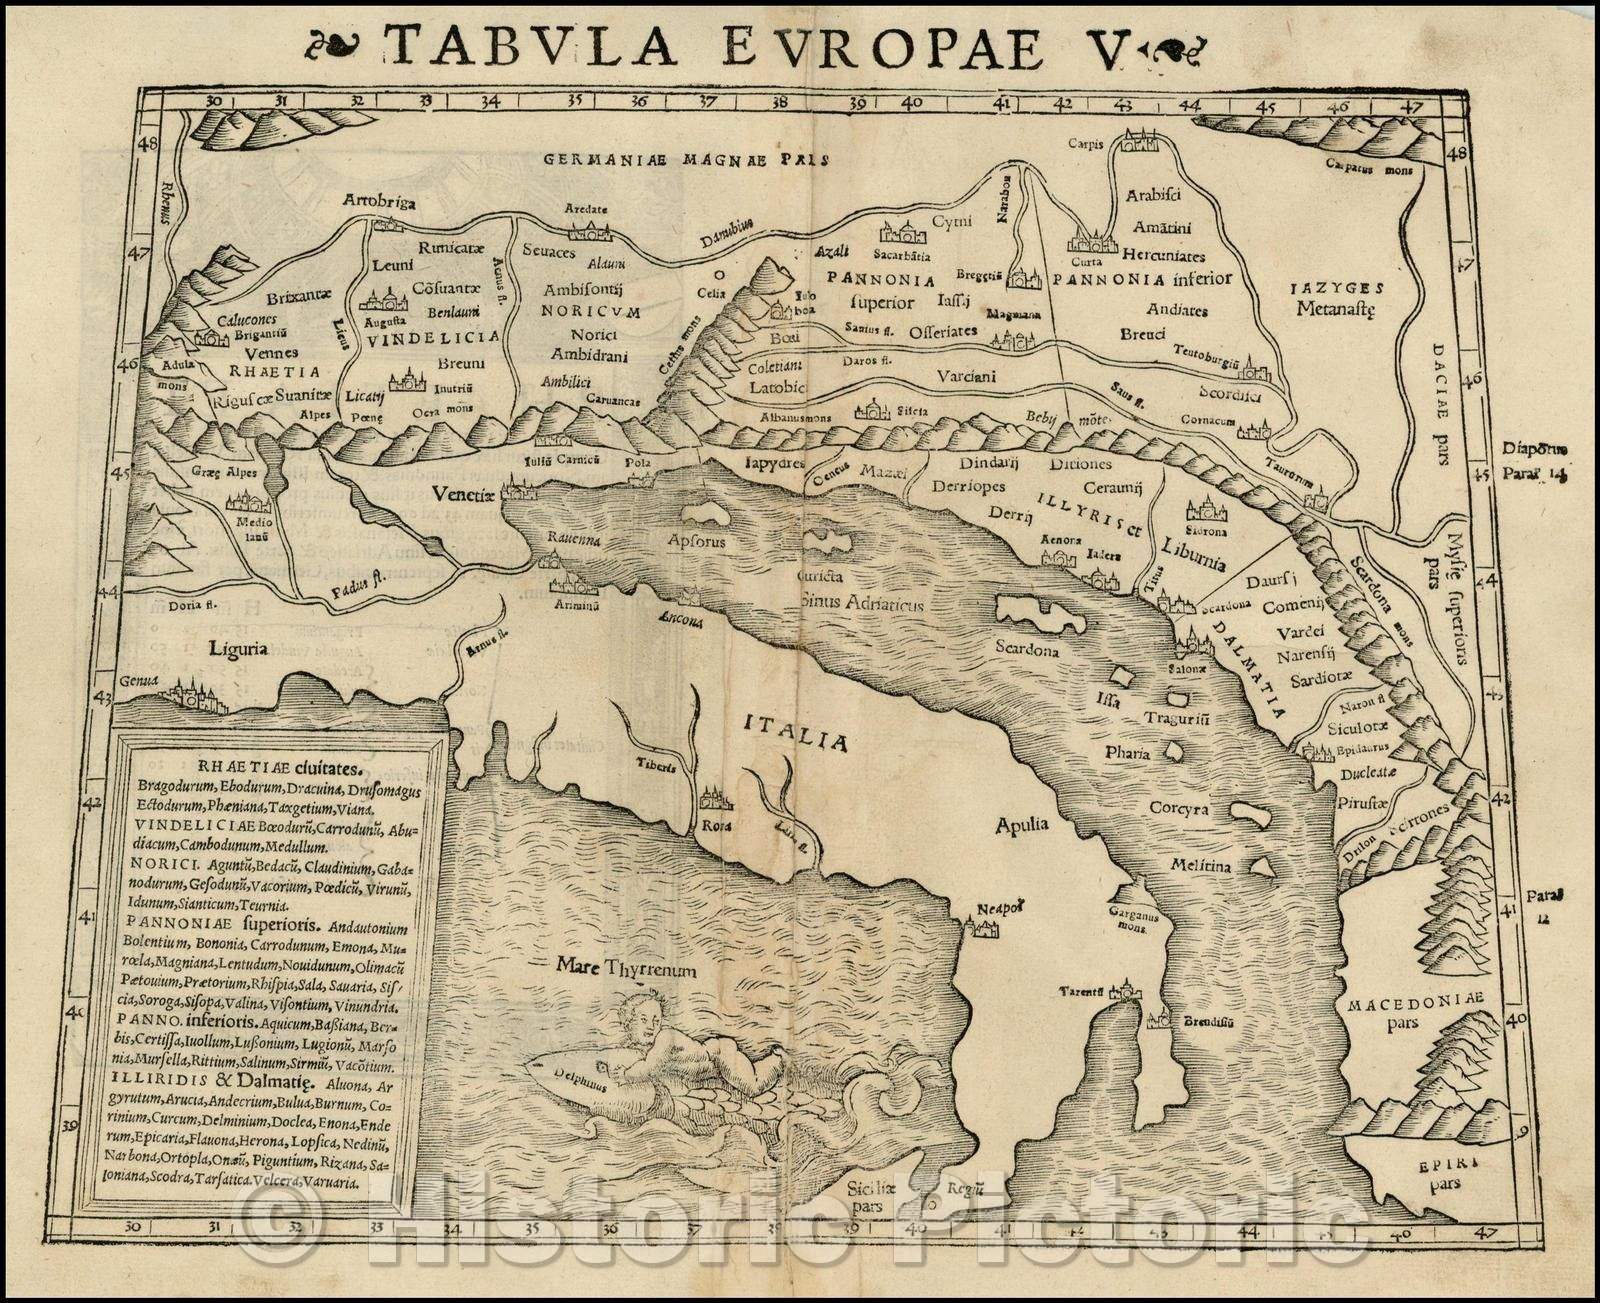 Historic Map - Europae Tabula V Adriatic, Italy & Balkans, 1542, Sebastian M?nster v1